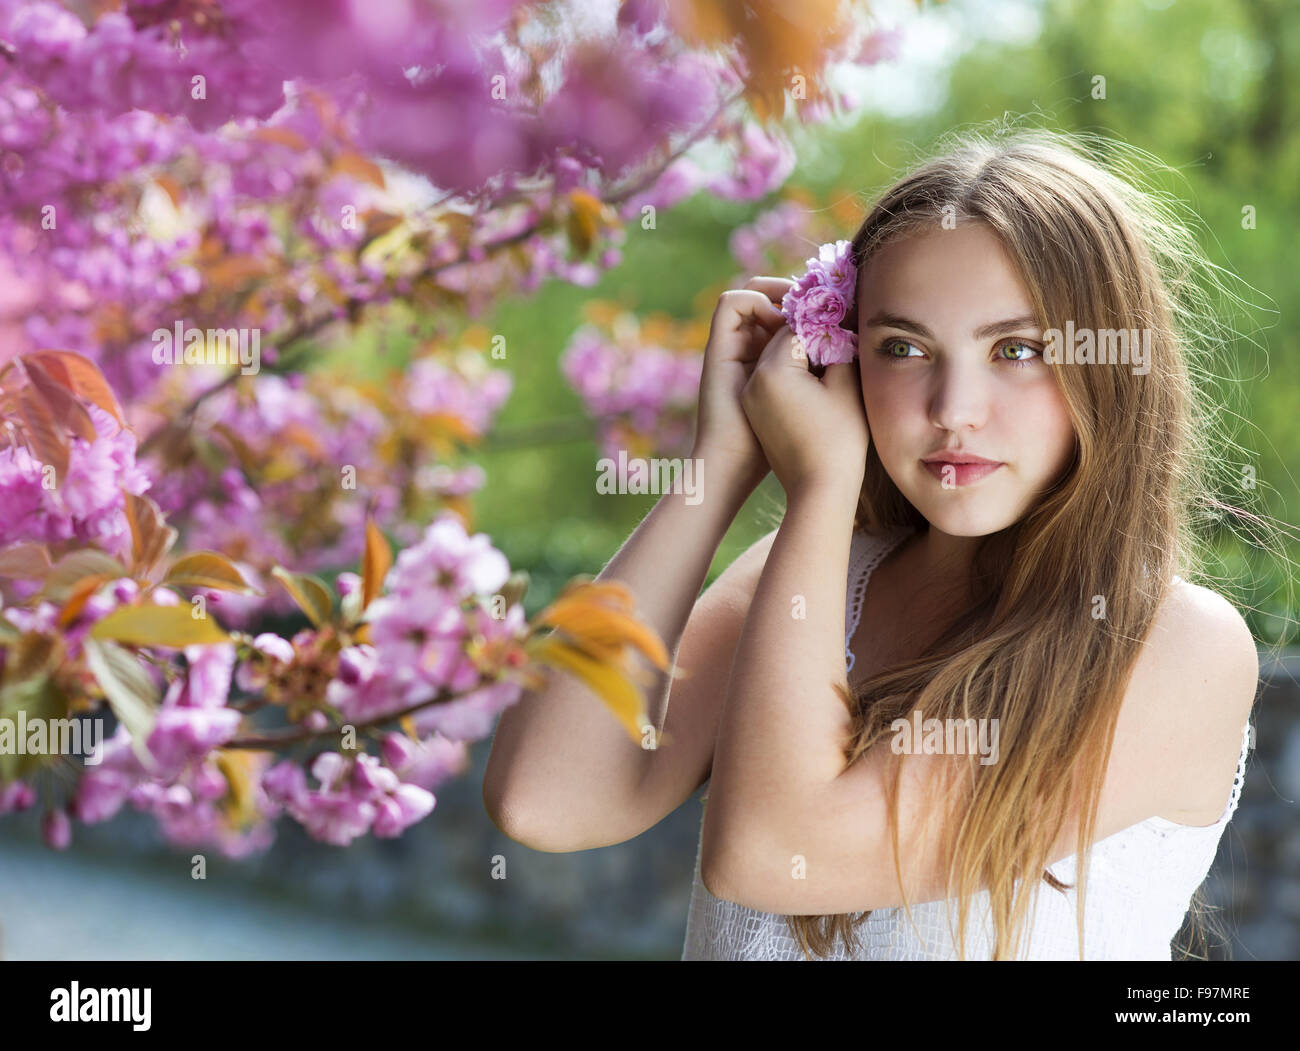 Schöne Mädchen im Frühlingsgarten unter den blühenden Bäumen mit rosa Blüten Stockfoto